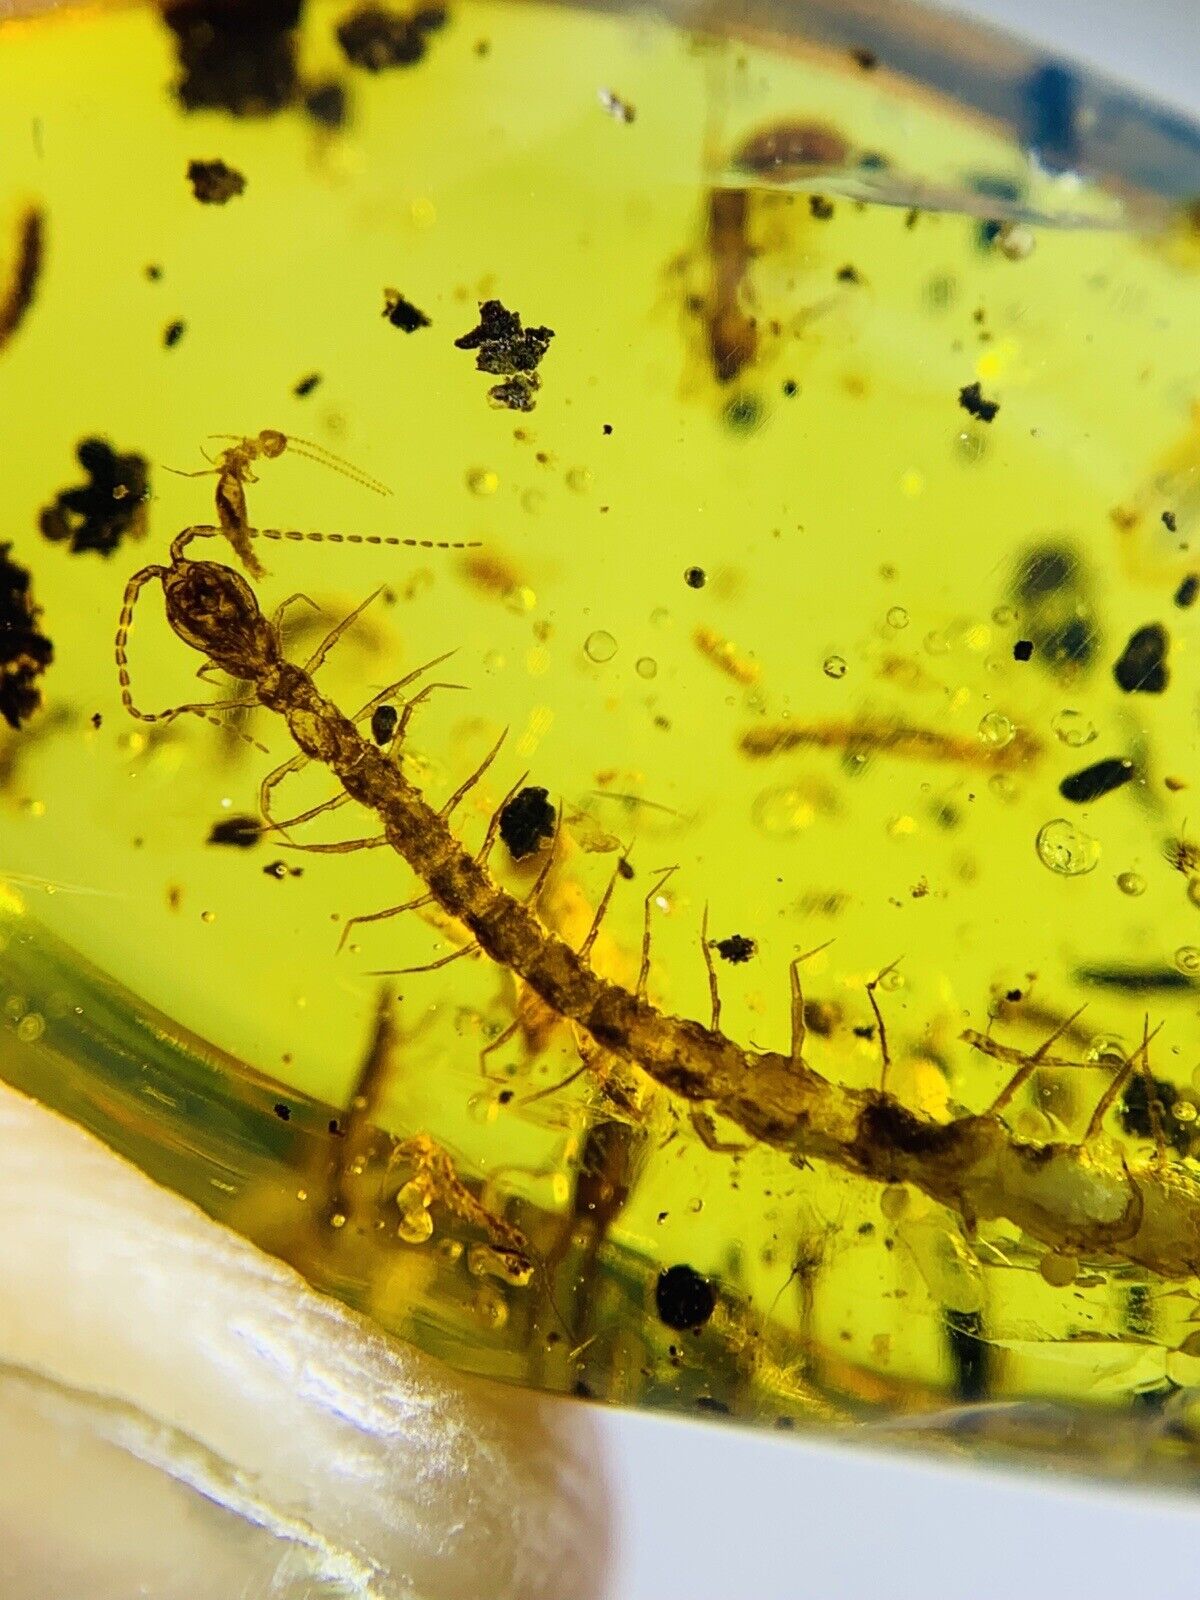 Centipede predation  burmite Cretaceous Amber fossil dinosaurs era